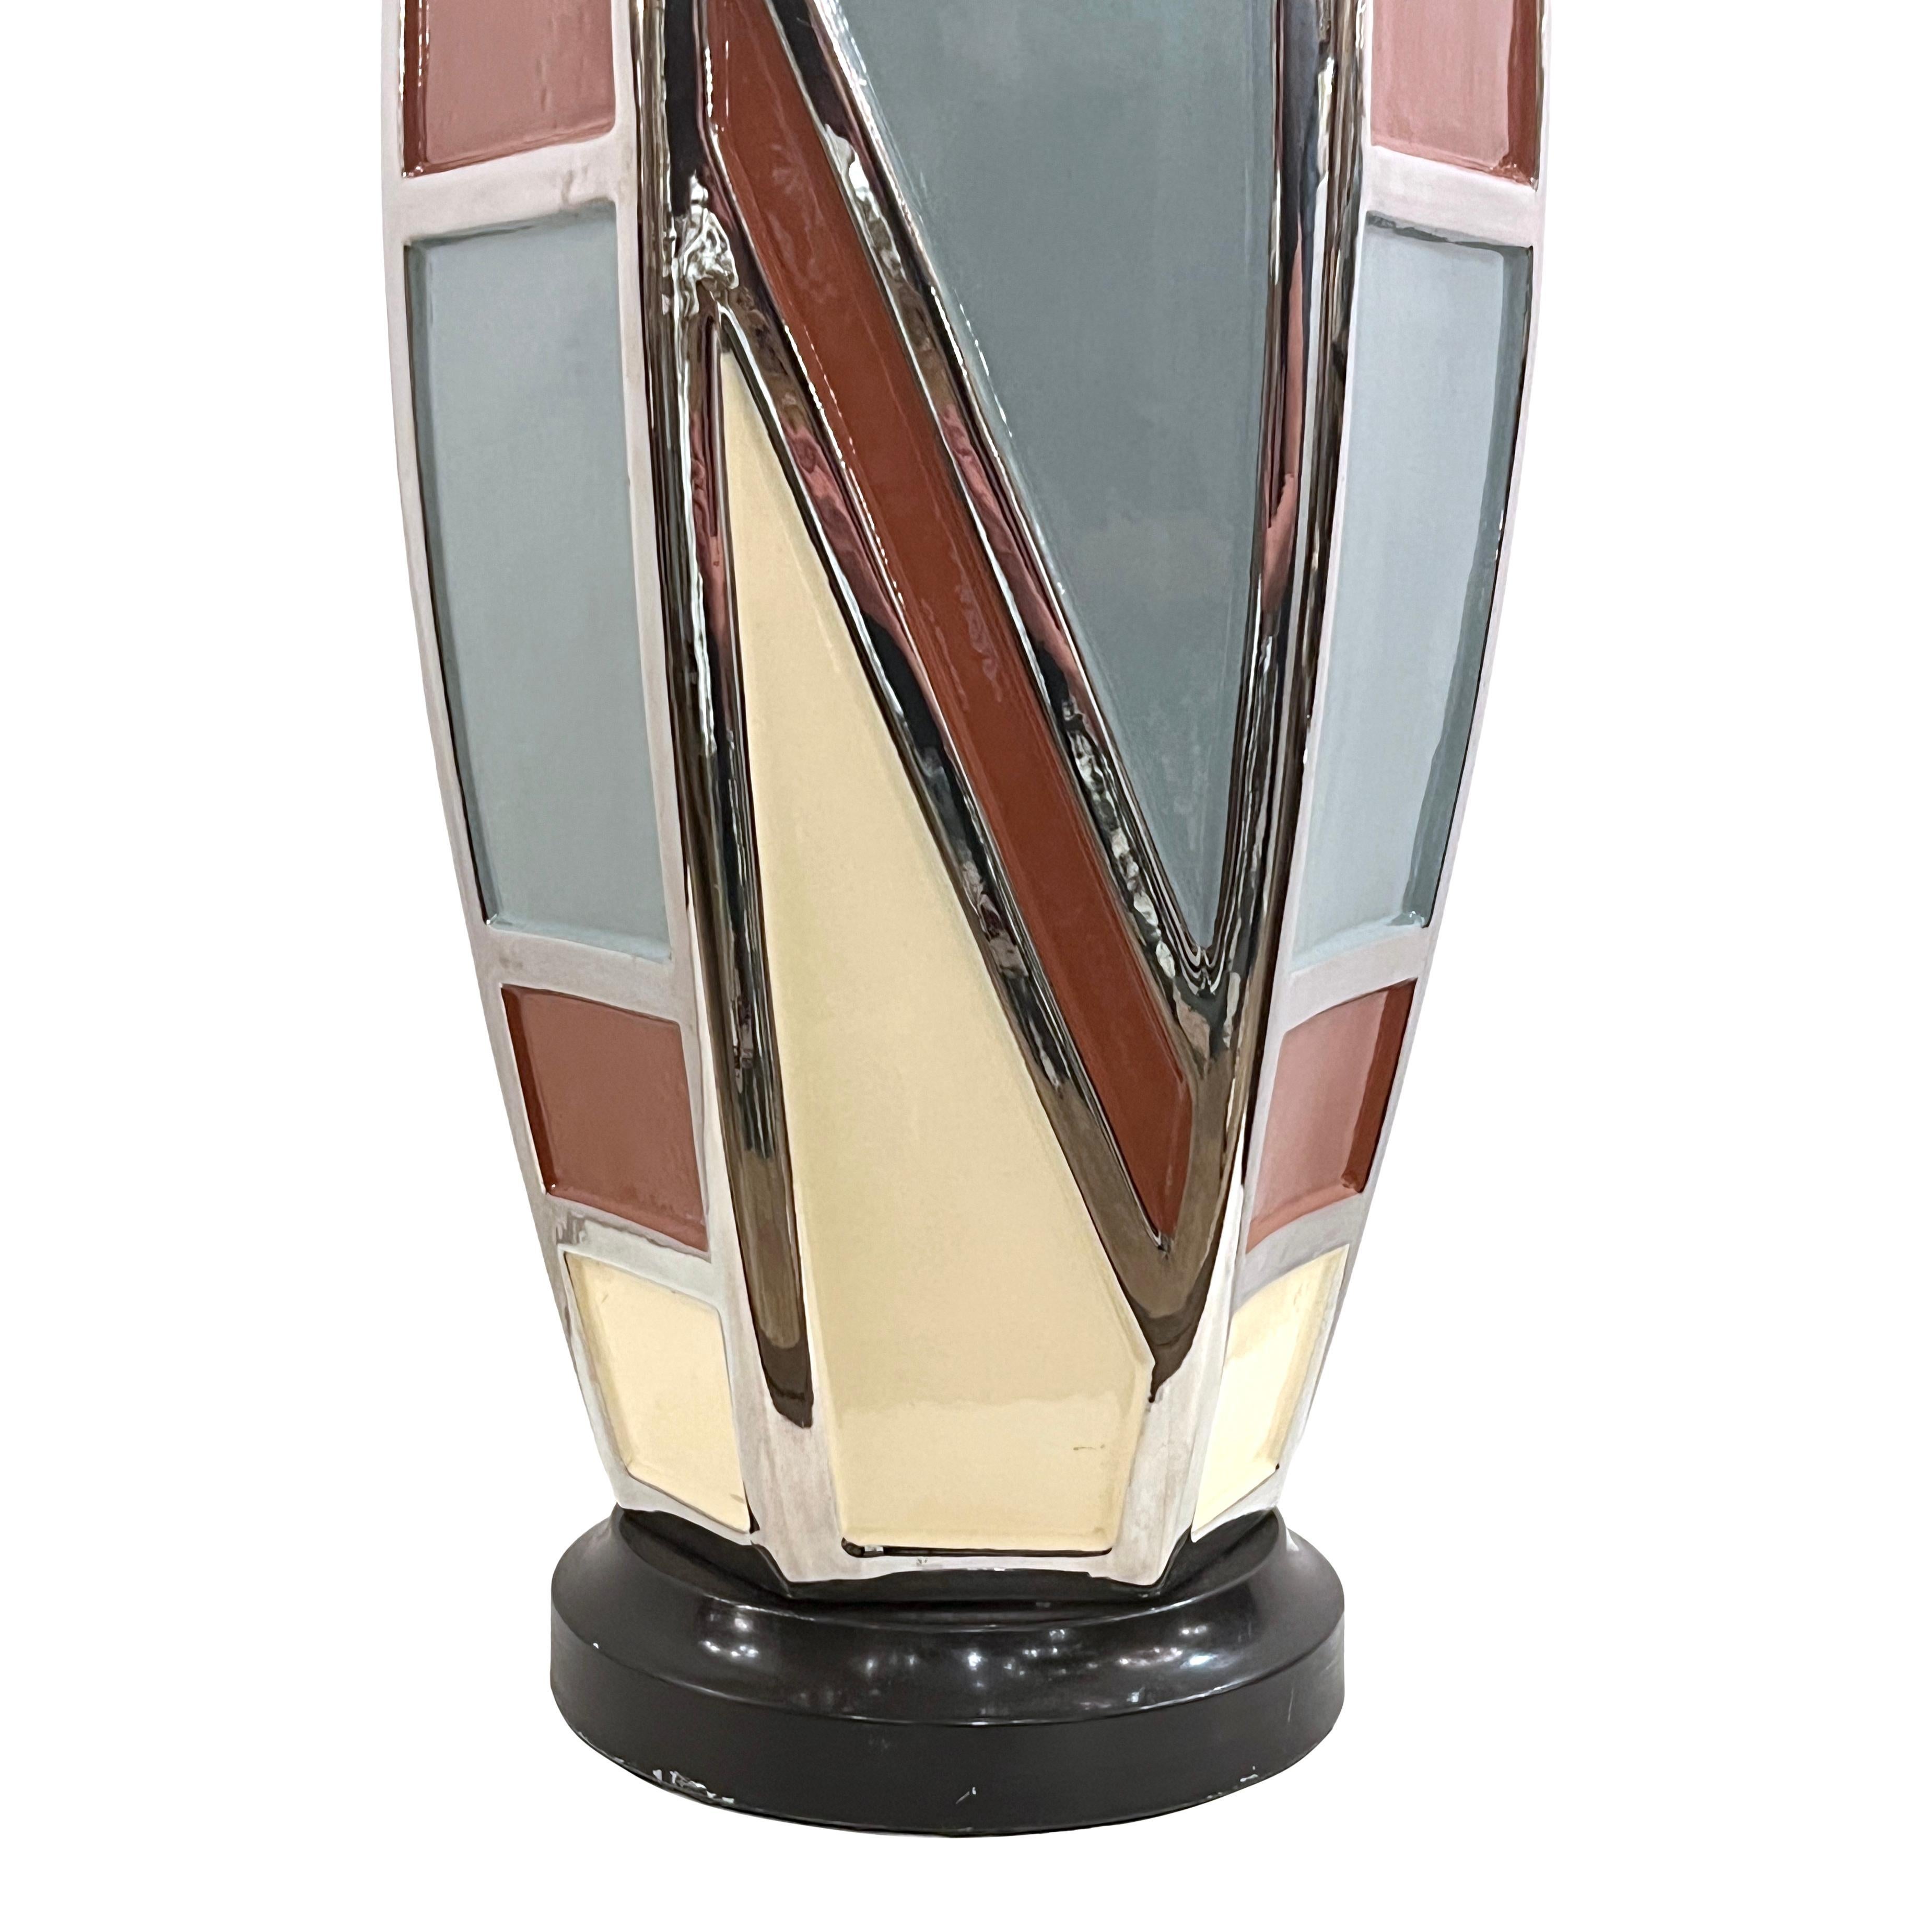 A circa 1960's Italian porcelain geometric lamp.

Measurements:
Height of body: 19